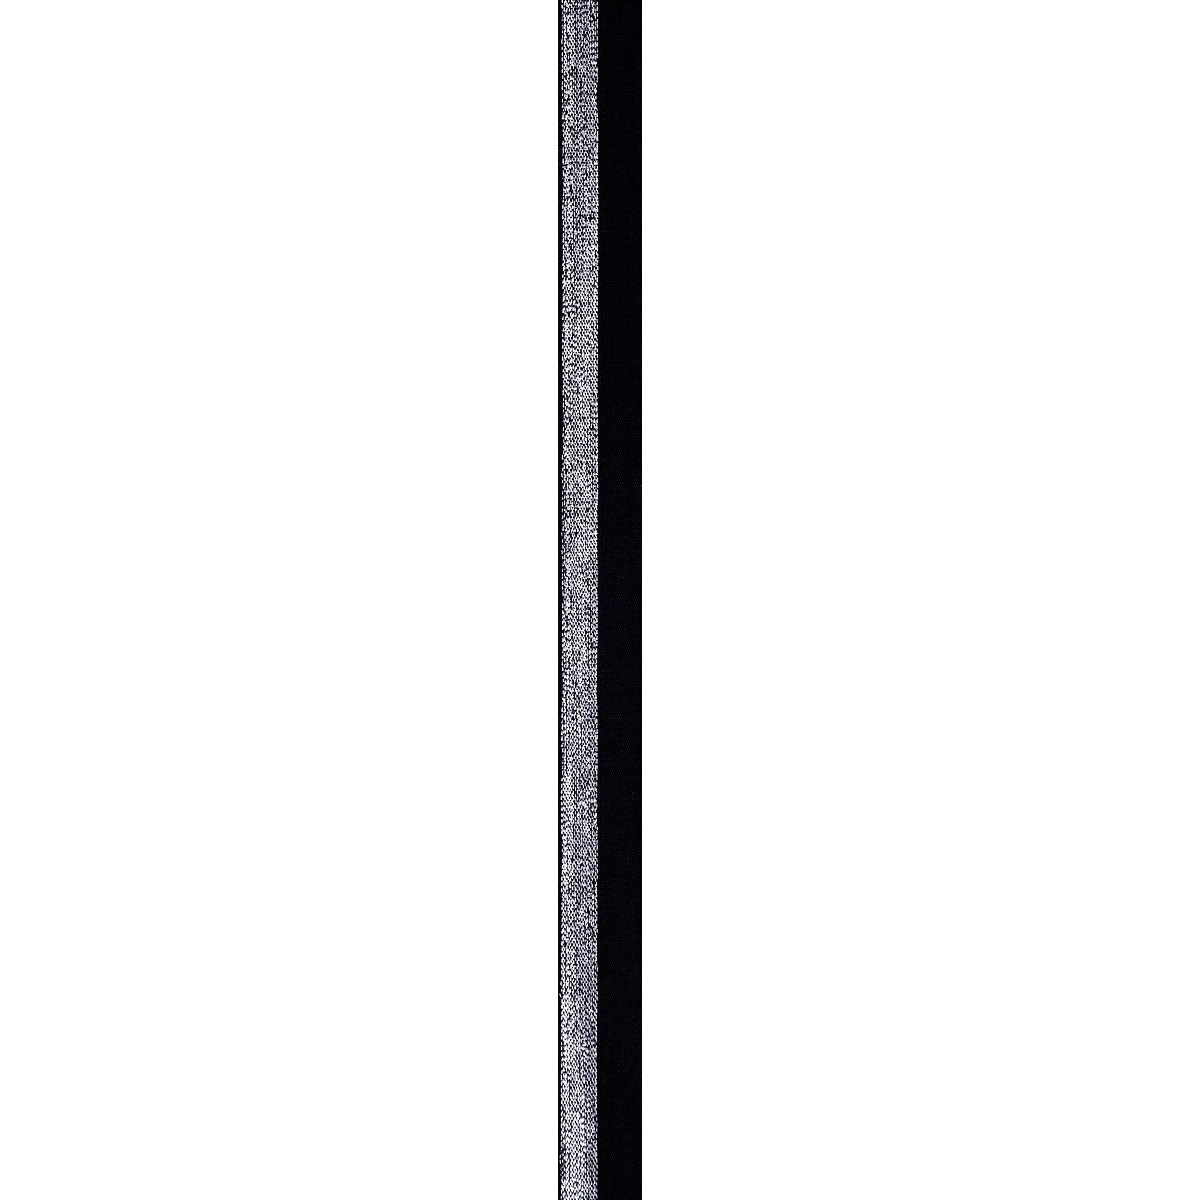 Sesgo Elástico Lurex Plata 16mm